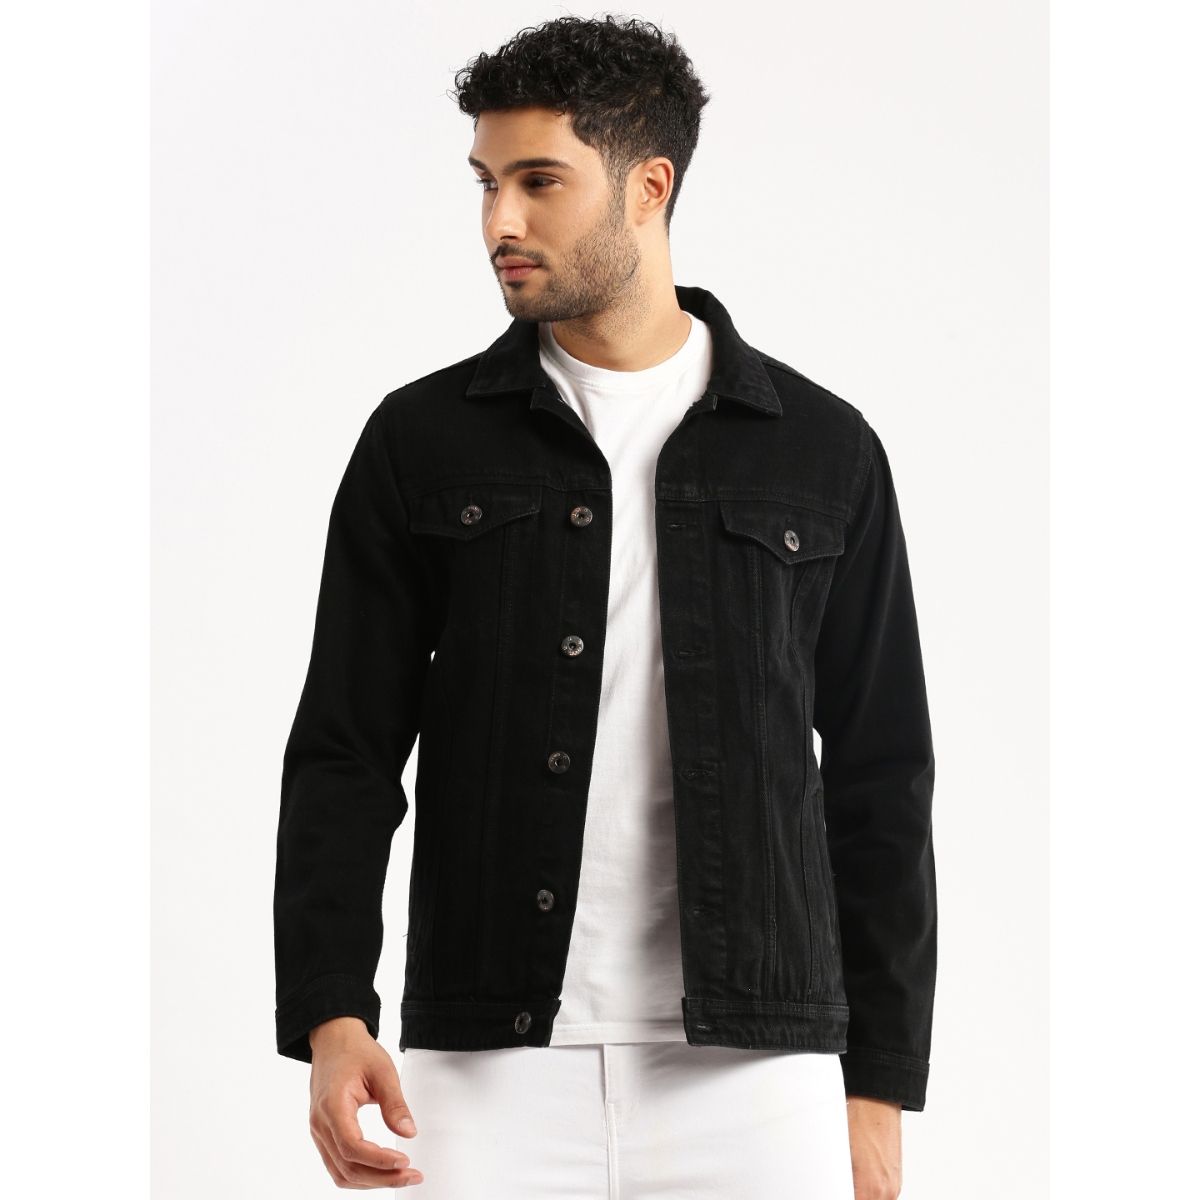 Buy KOTTY Black Full Sleeve Solid Denim Jacket (Black,34) at Amazon.in